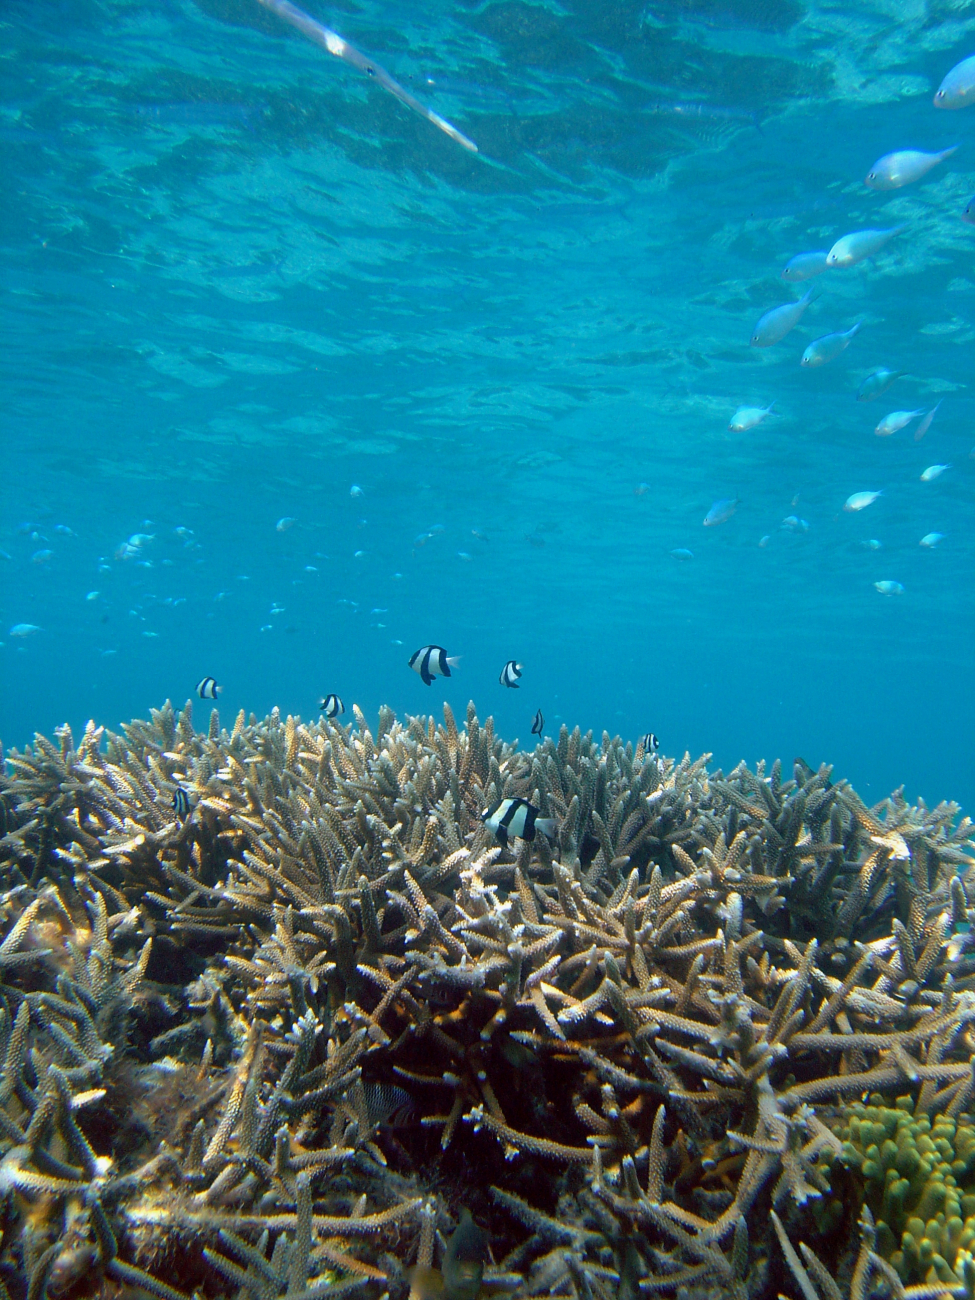 Reef scene with damselfish (Dascyllus aruanus) in distance